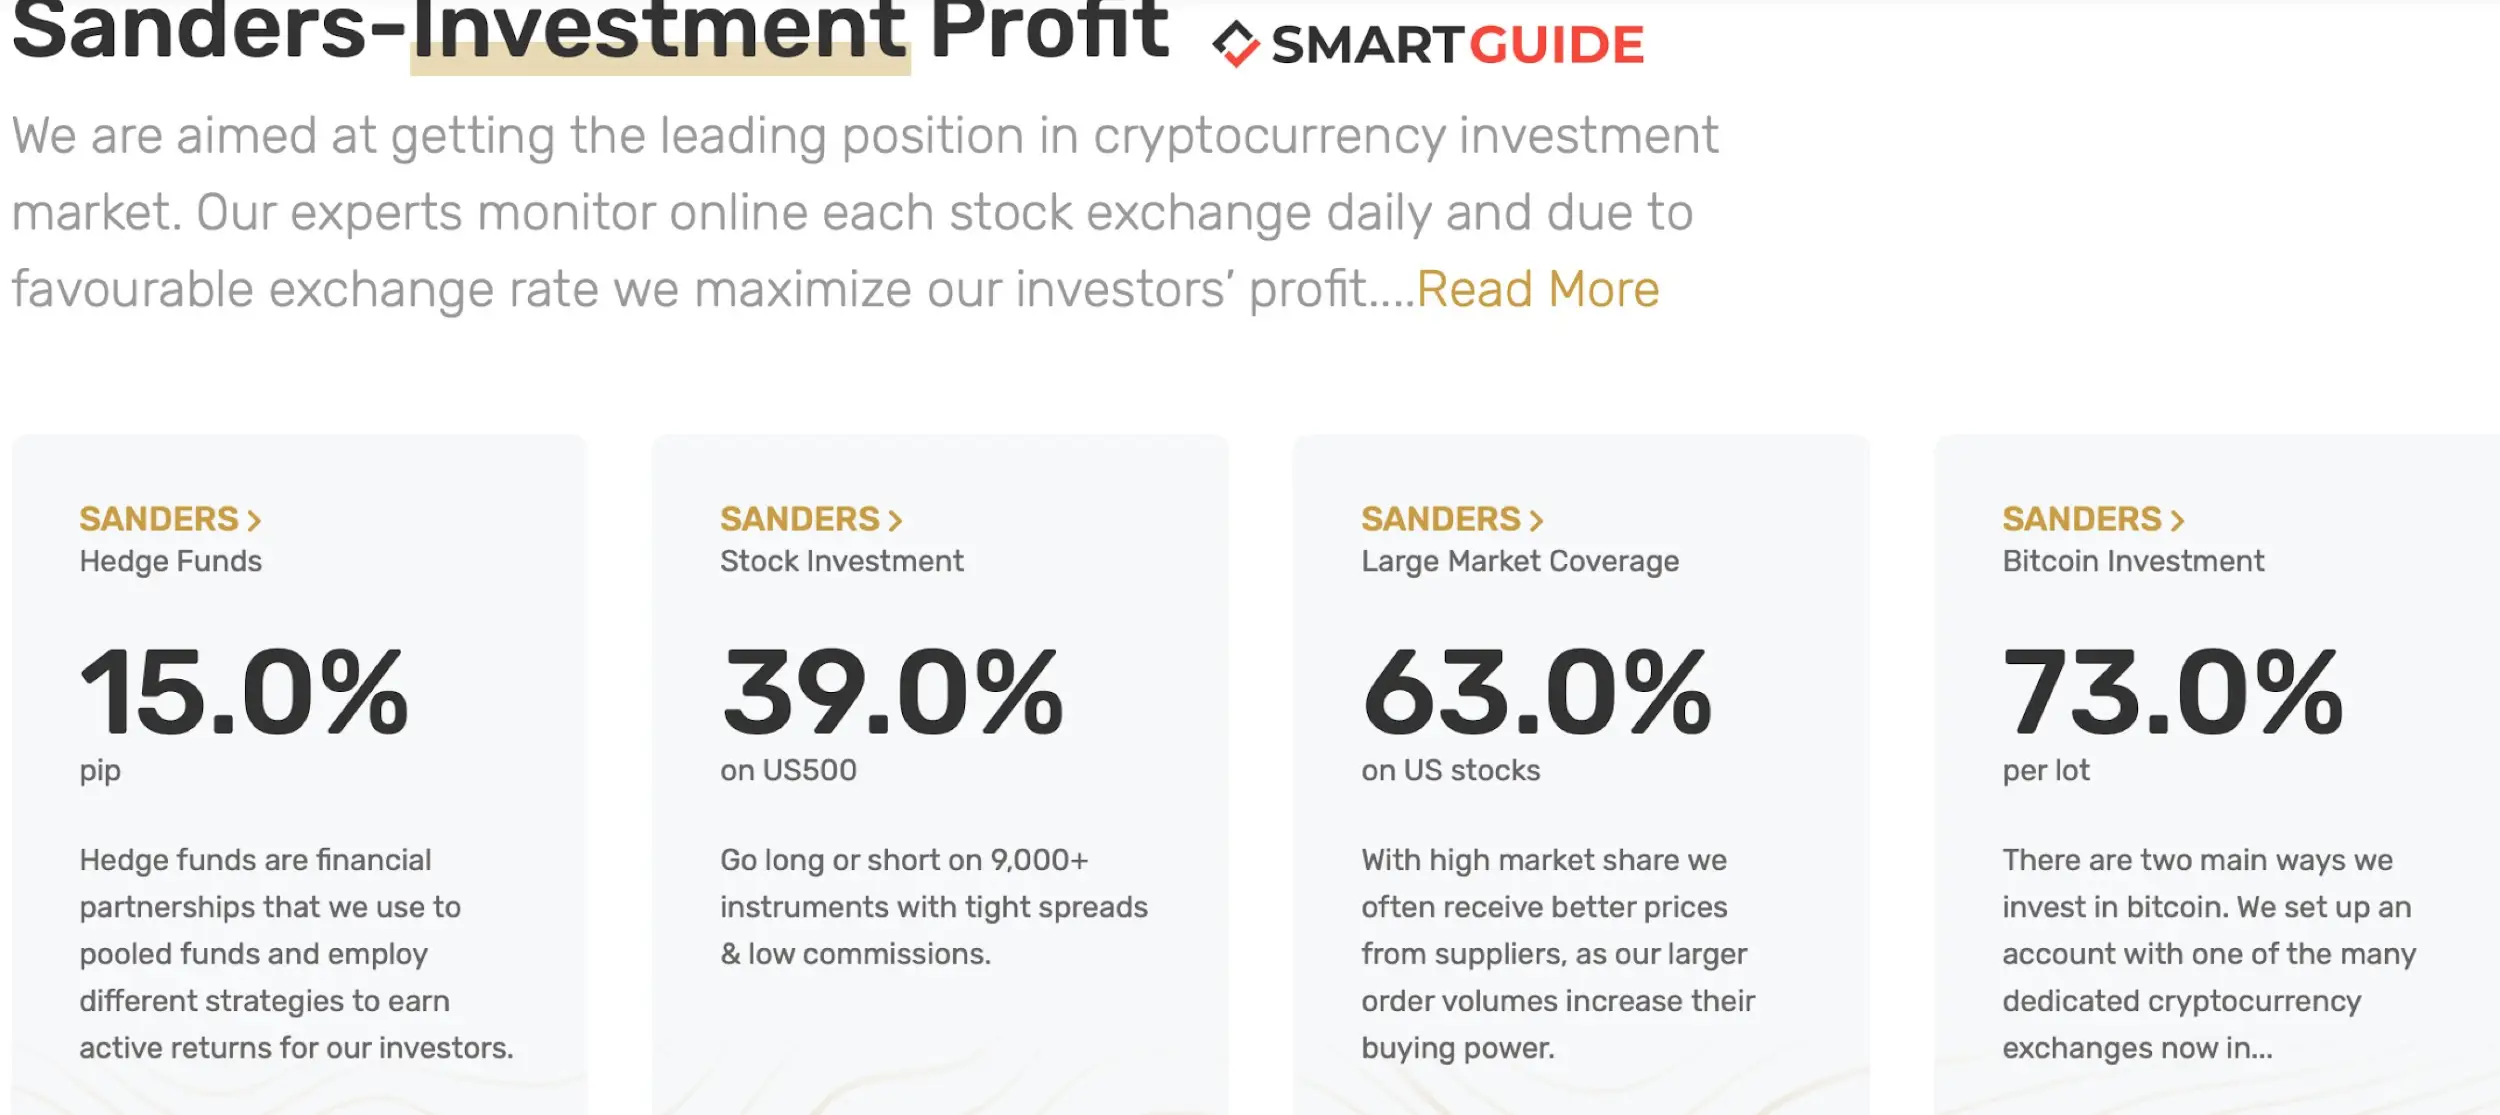 Sanders Investment